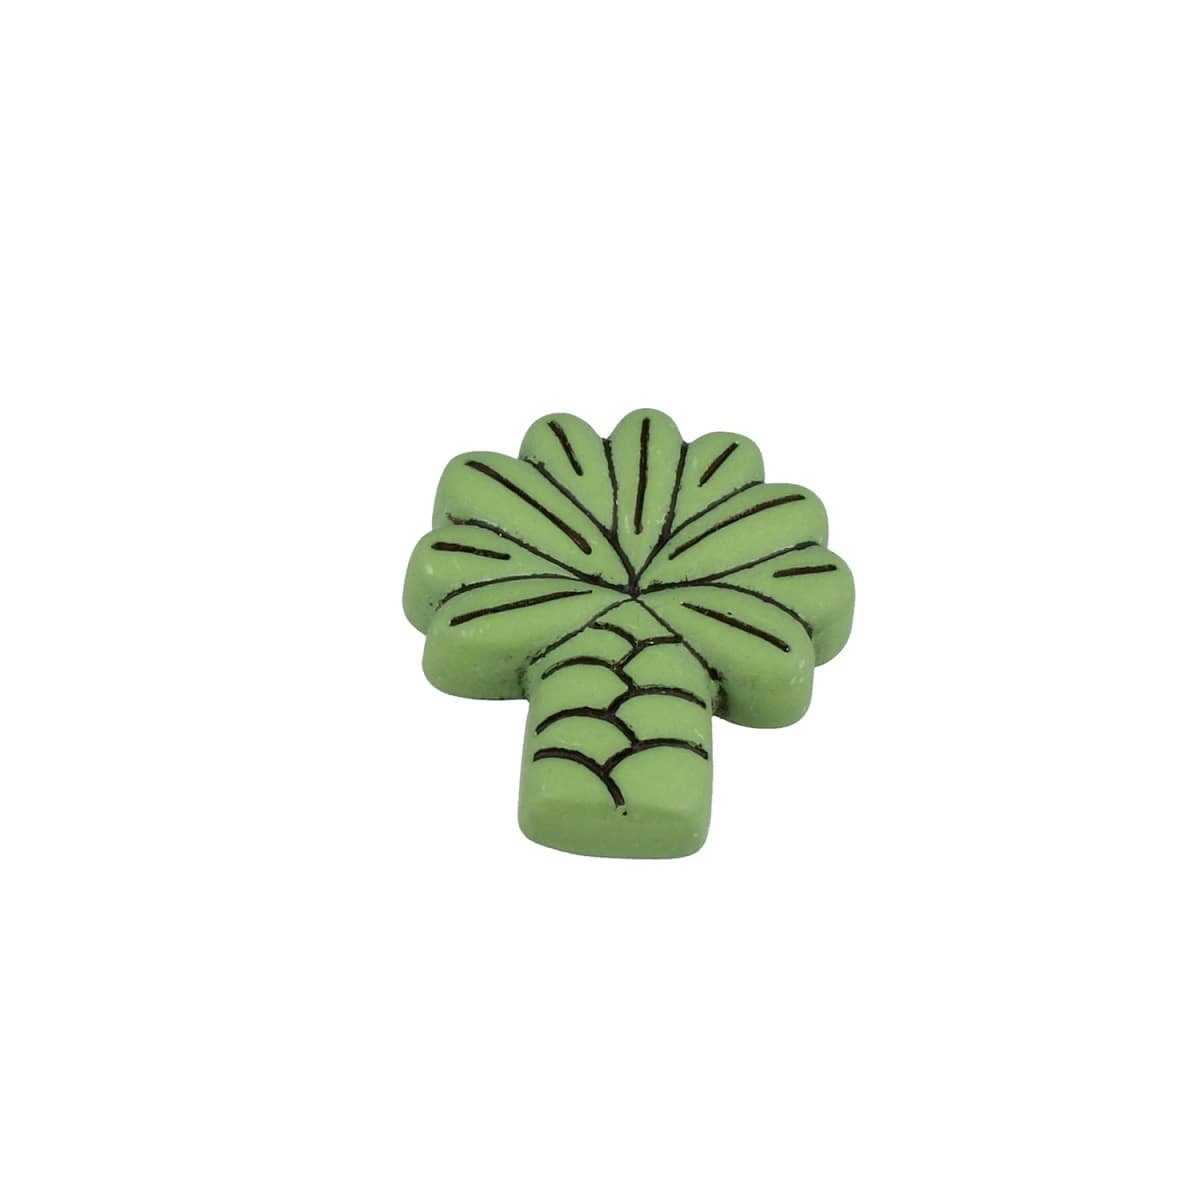 Kindermöbelknopf Türbeschlag Palme Modell Beschläge Kommodenkn Möbelknopf MS Schrankknopf Grüne